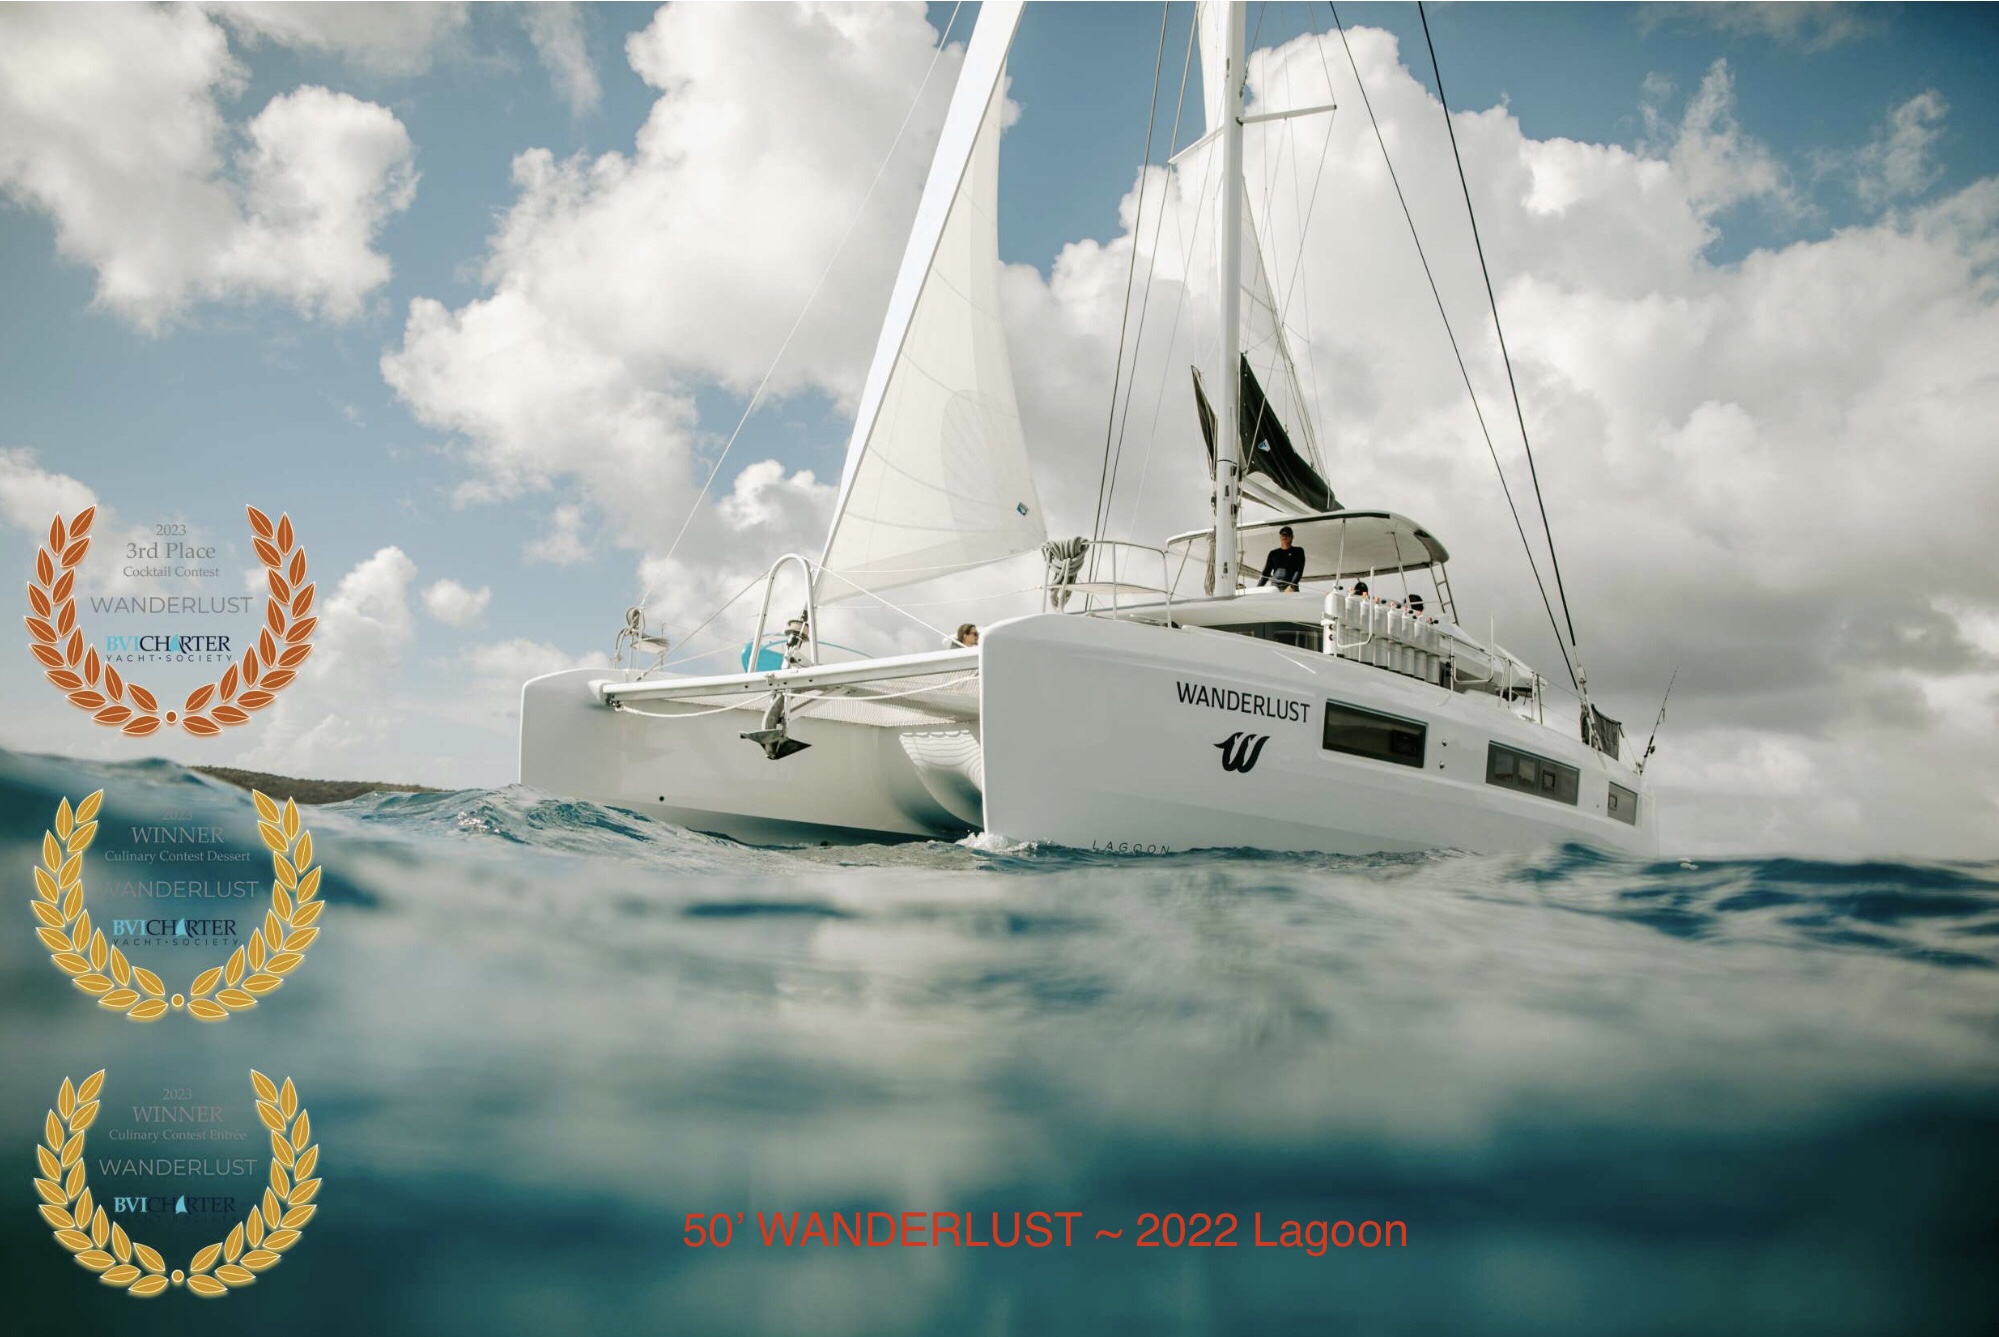 50’ Wanderlust ~ 2022 Lagoon Catamaran